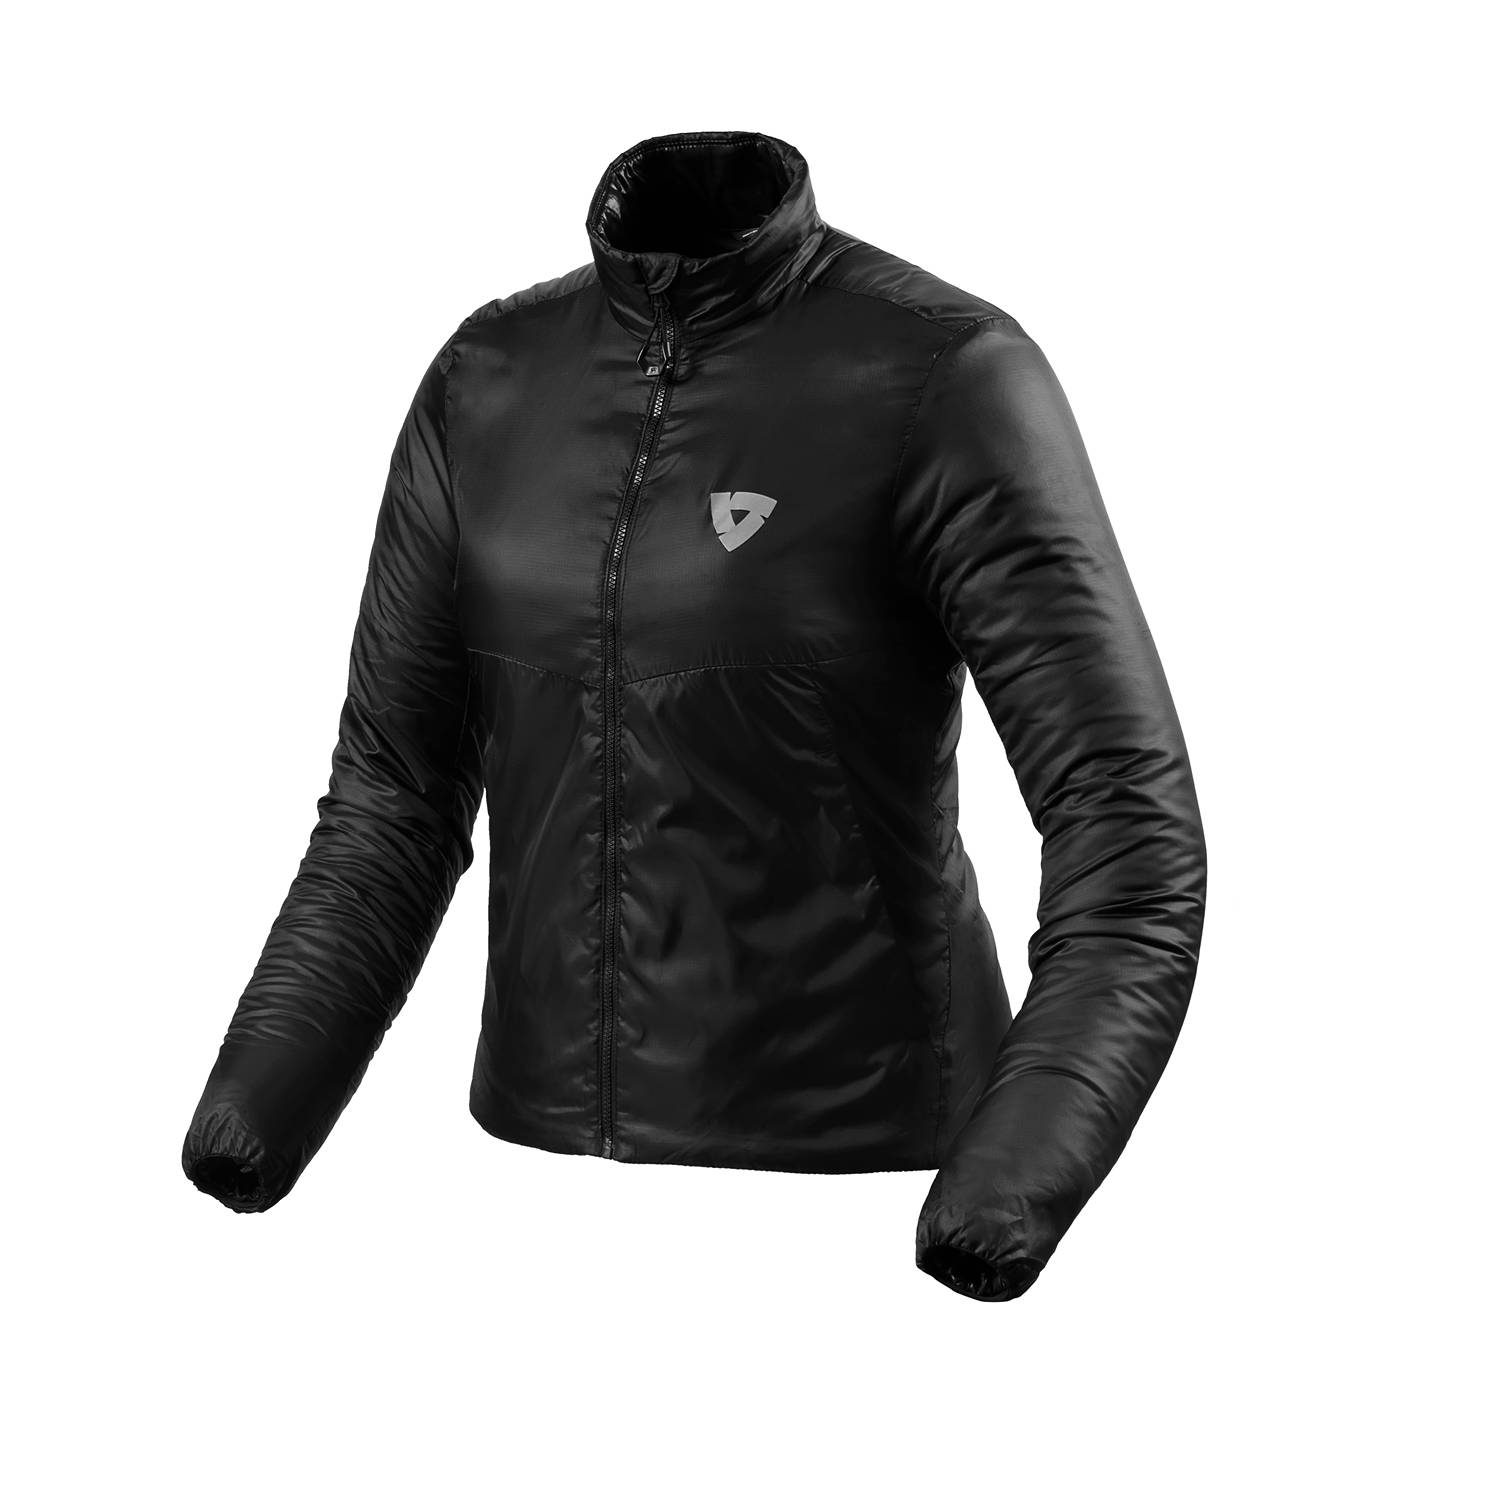 Image of REV'IT! Core 2 Ladies Mid Layer Jacket Black Size S ID 8700001372480